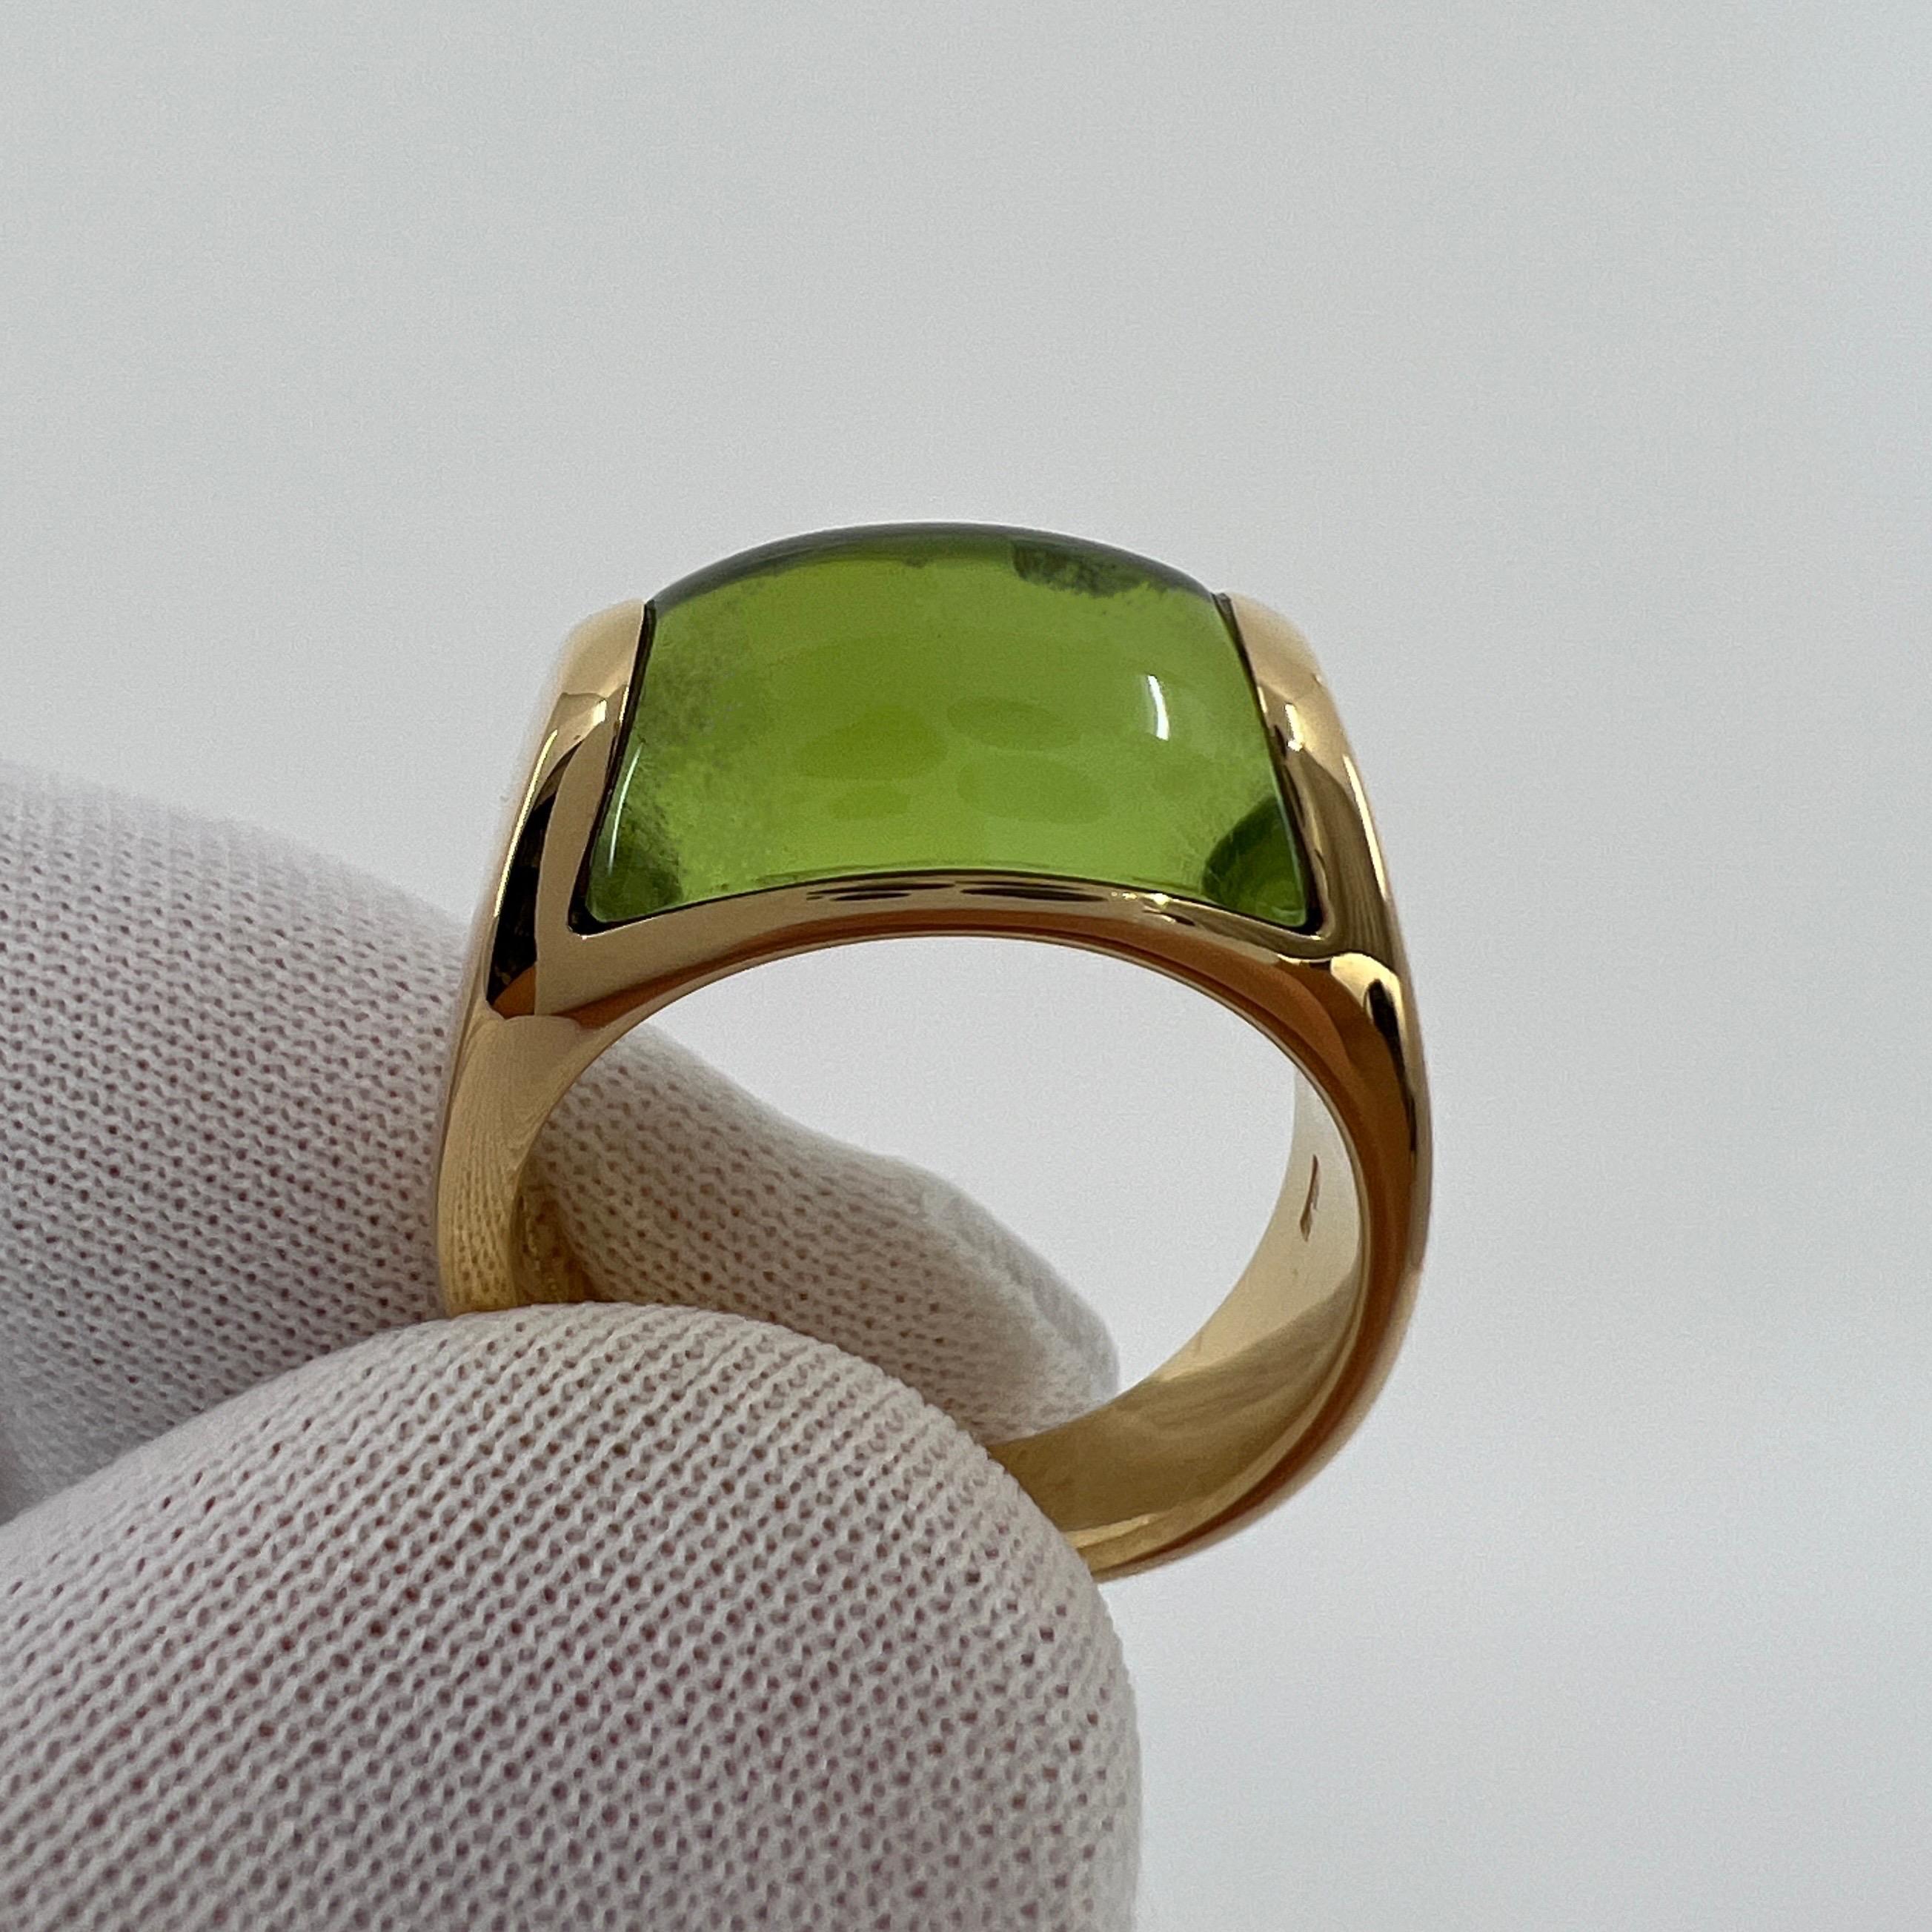 Rare Bvlgari Bulgari Tronchetto 18k Yellow Gold Green Peridot Ring with Box 2